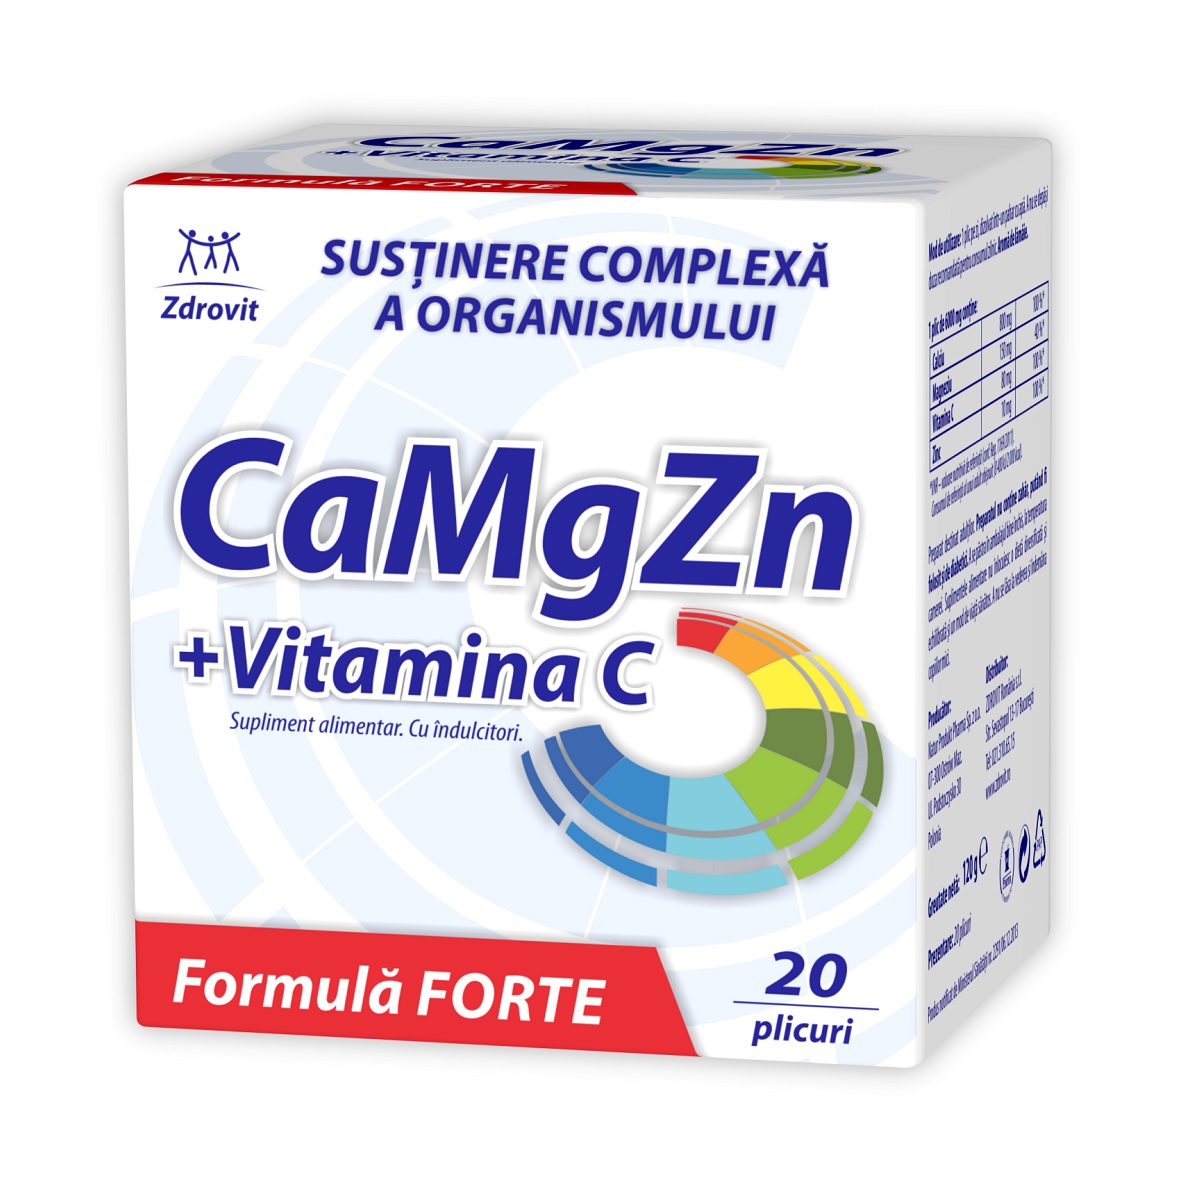 Uz general - CaMgZn + Vitamina C, 20 plicuri, Zdrovit, sinapis.ro